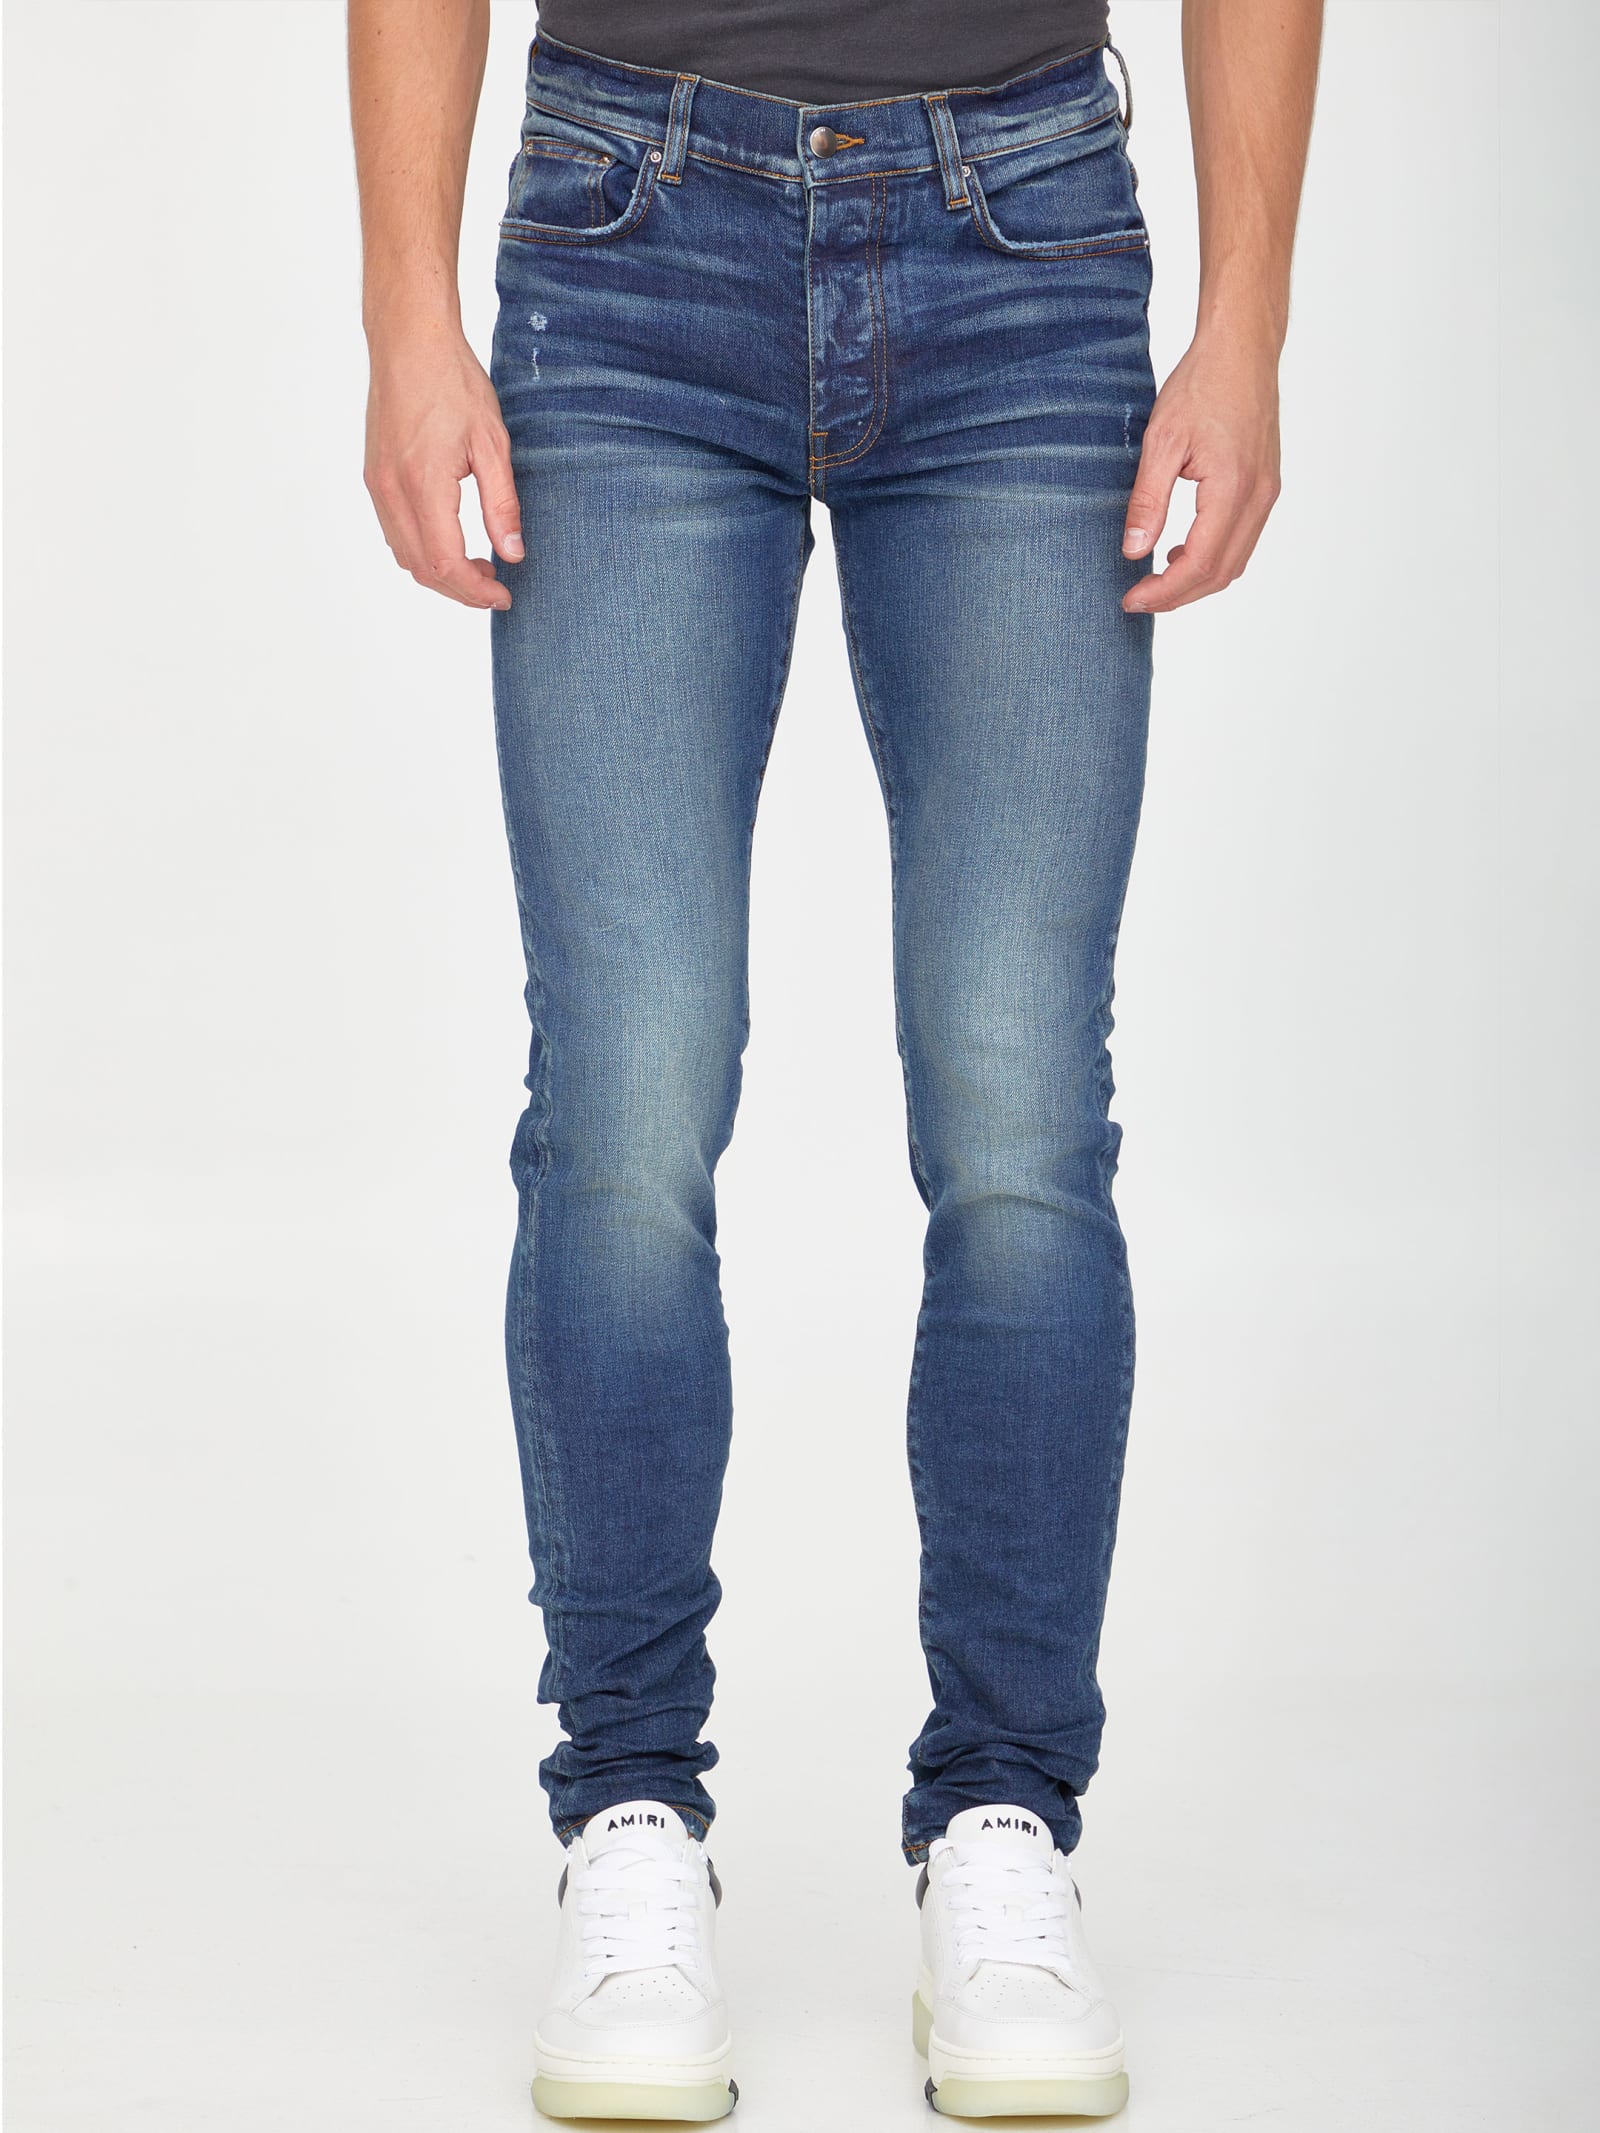 AMIRI Blue Denim Jeans